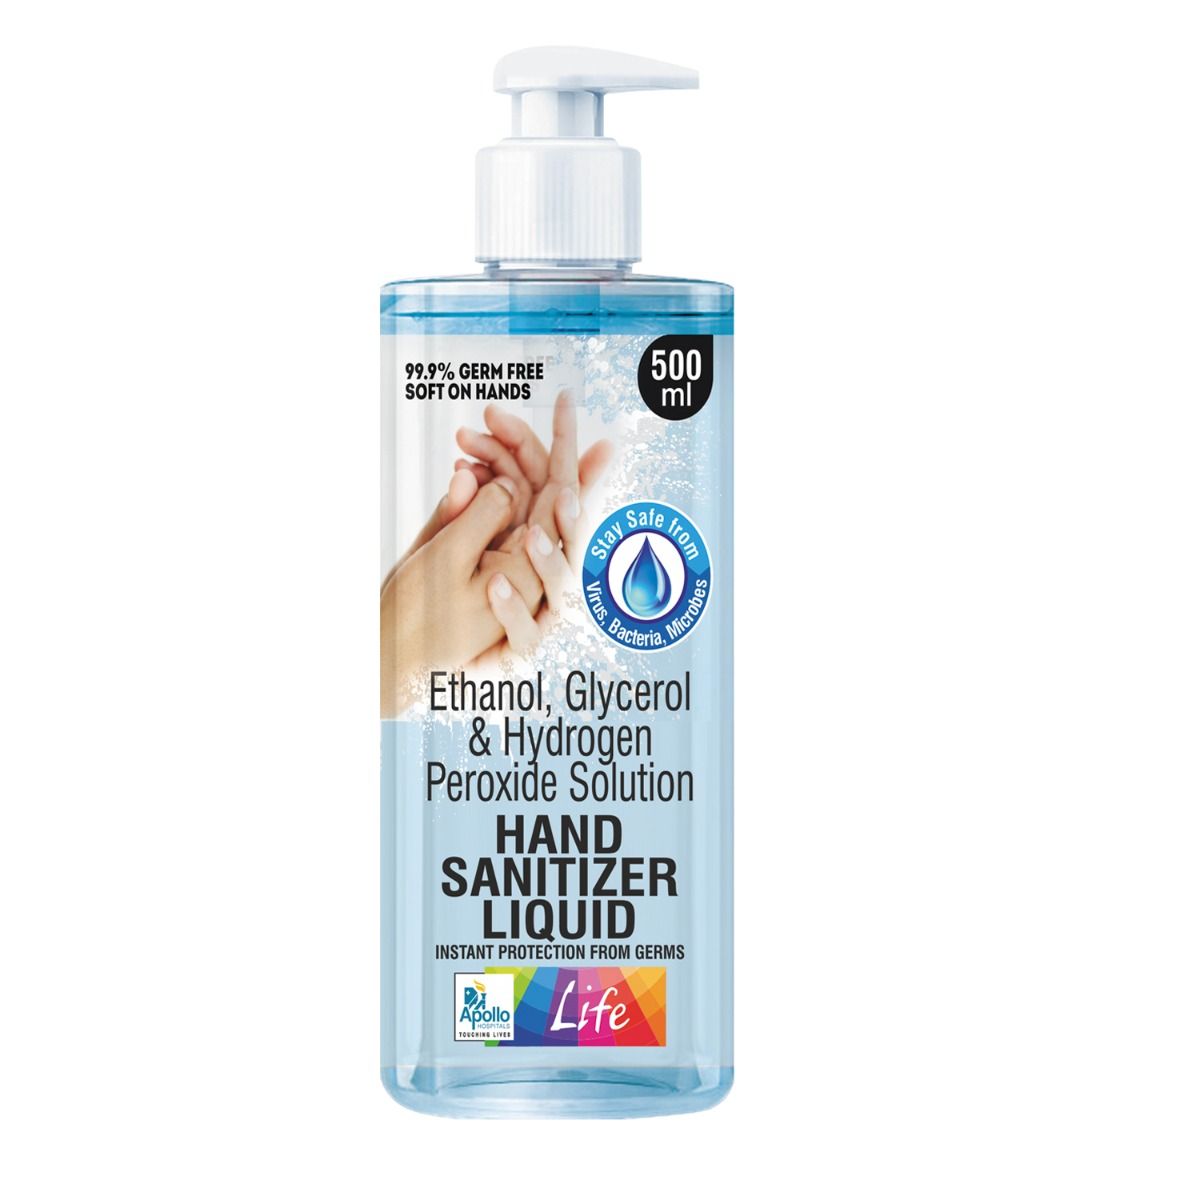 Apollo Life Hand Sanitizer Liquid With Dispenser, 500 ml, Pack of 1 